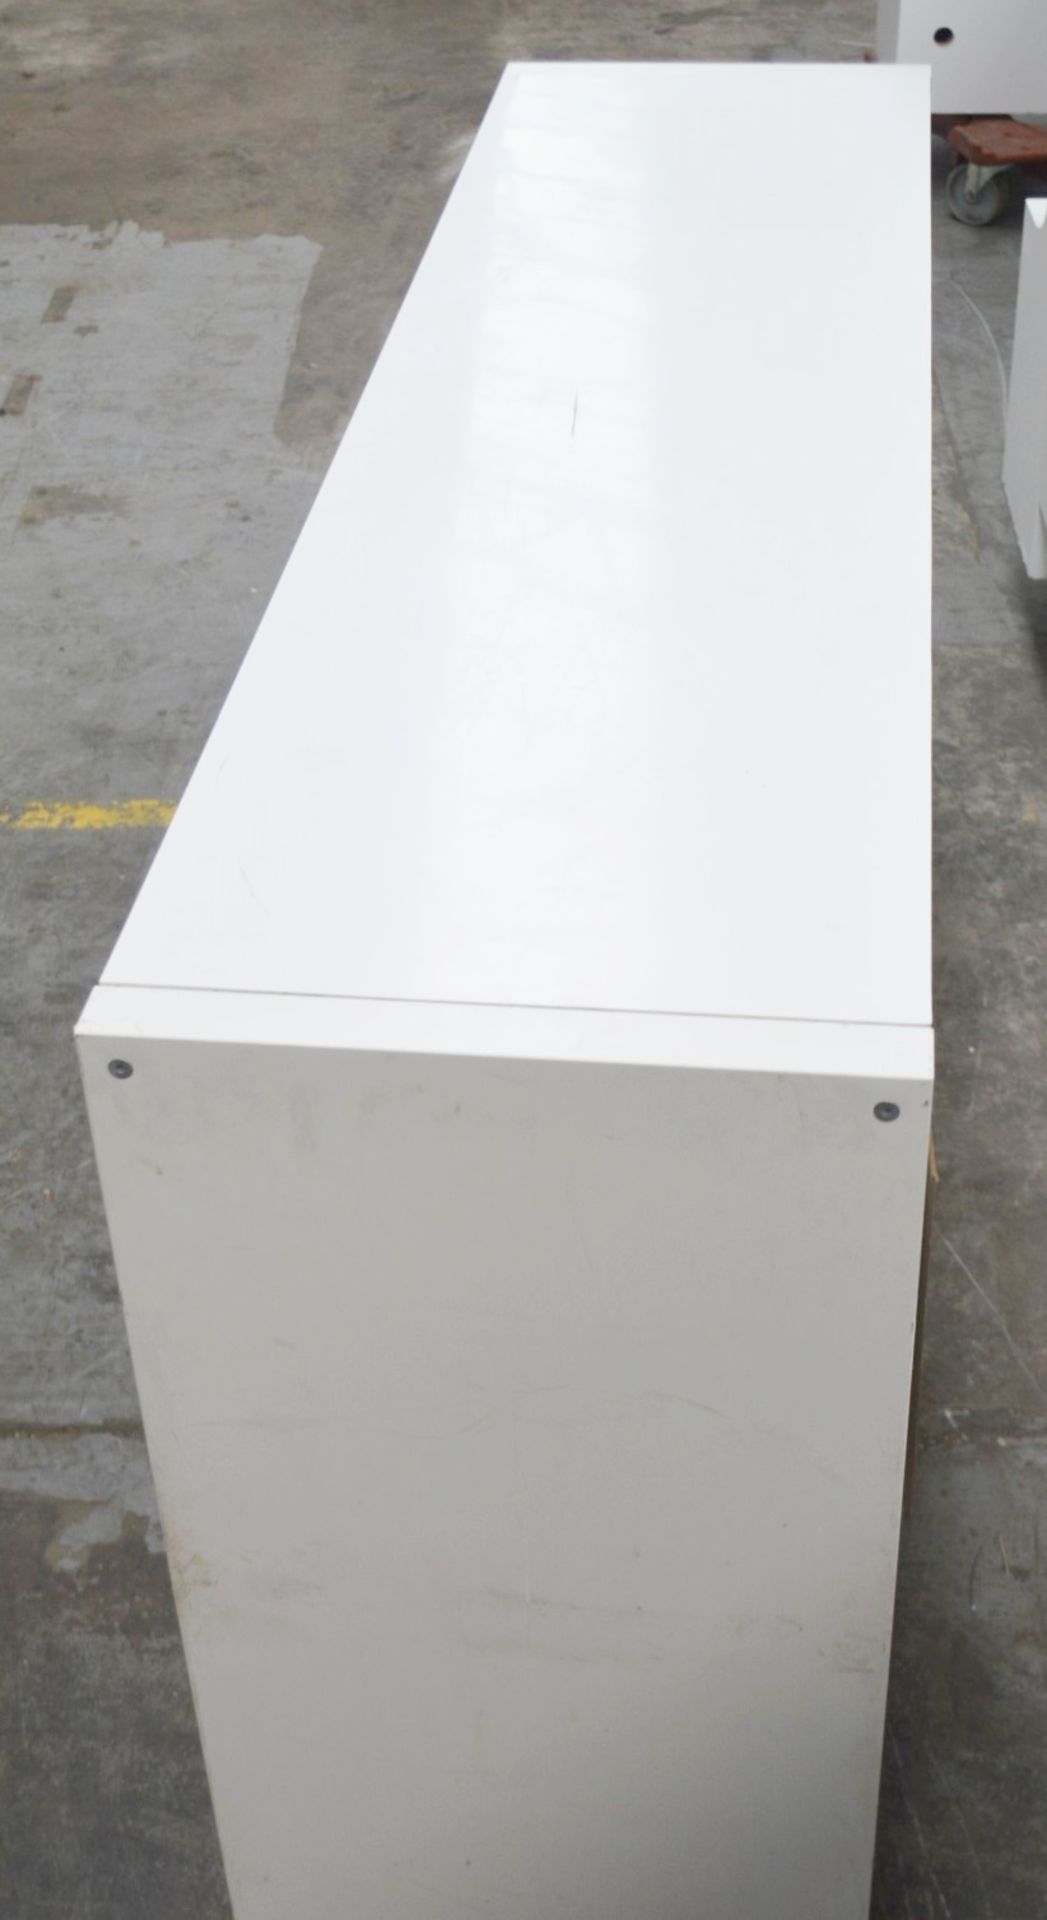 1 x 8-Door Salon Storage Unit In White - Dimensions: H77 x W146.5 x D38.7cm - Ref: MHB141 - - Image 3 of 3